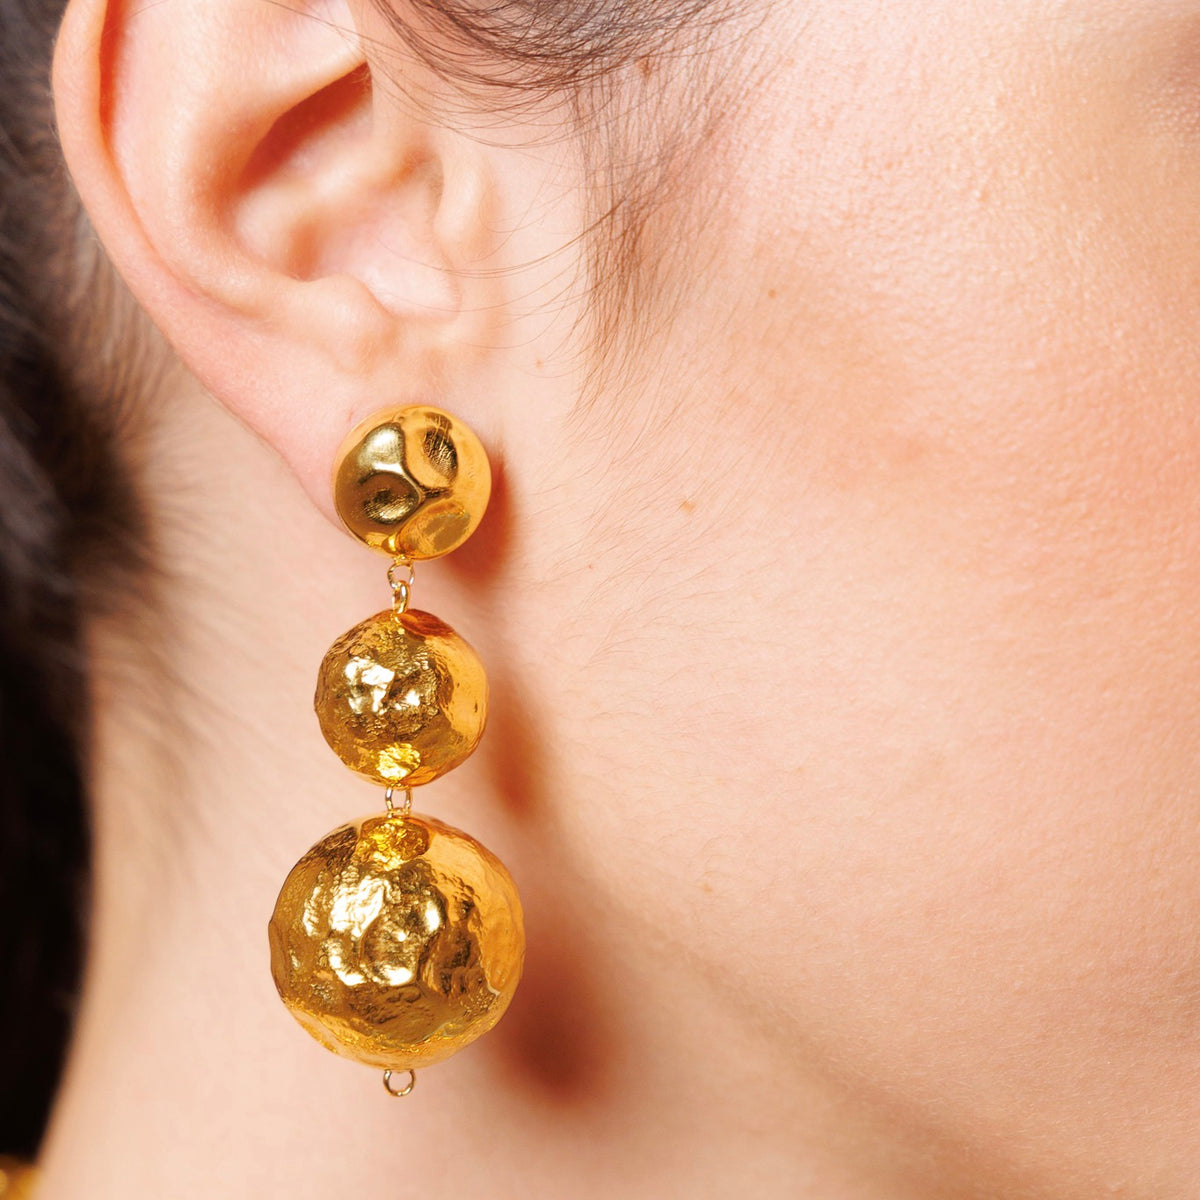 Crush Earrings in Gold